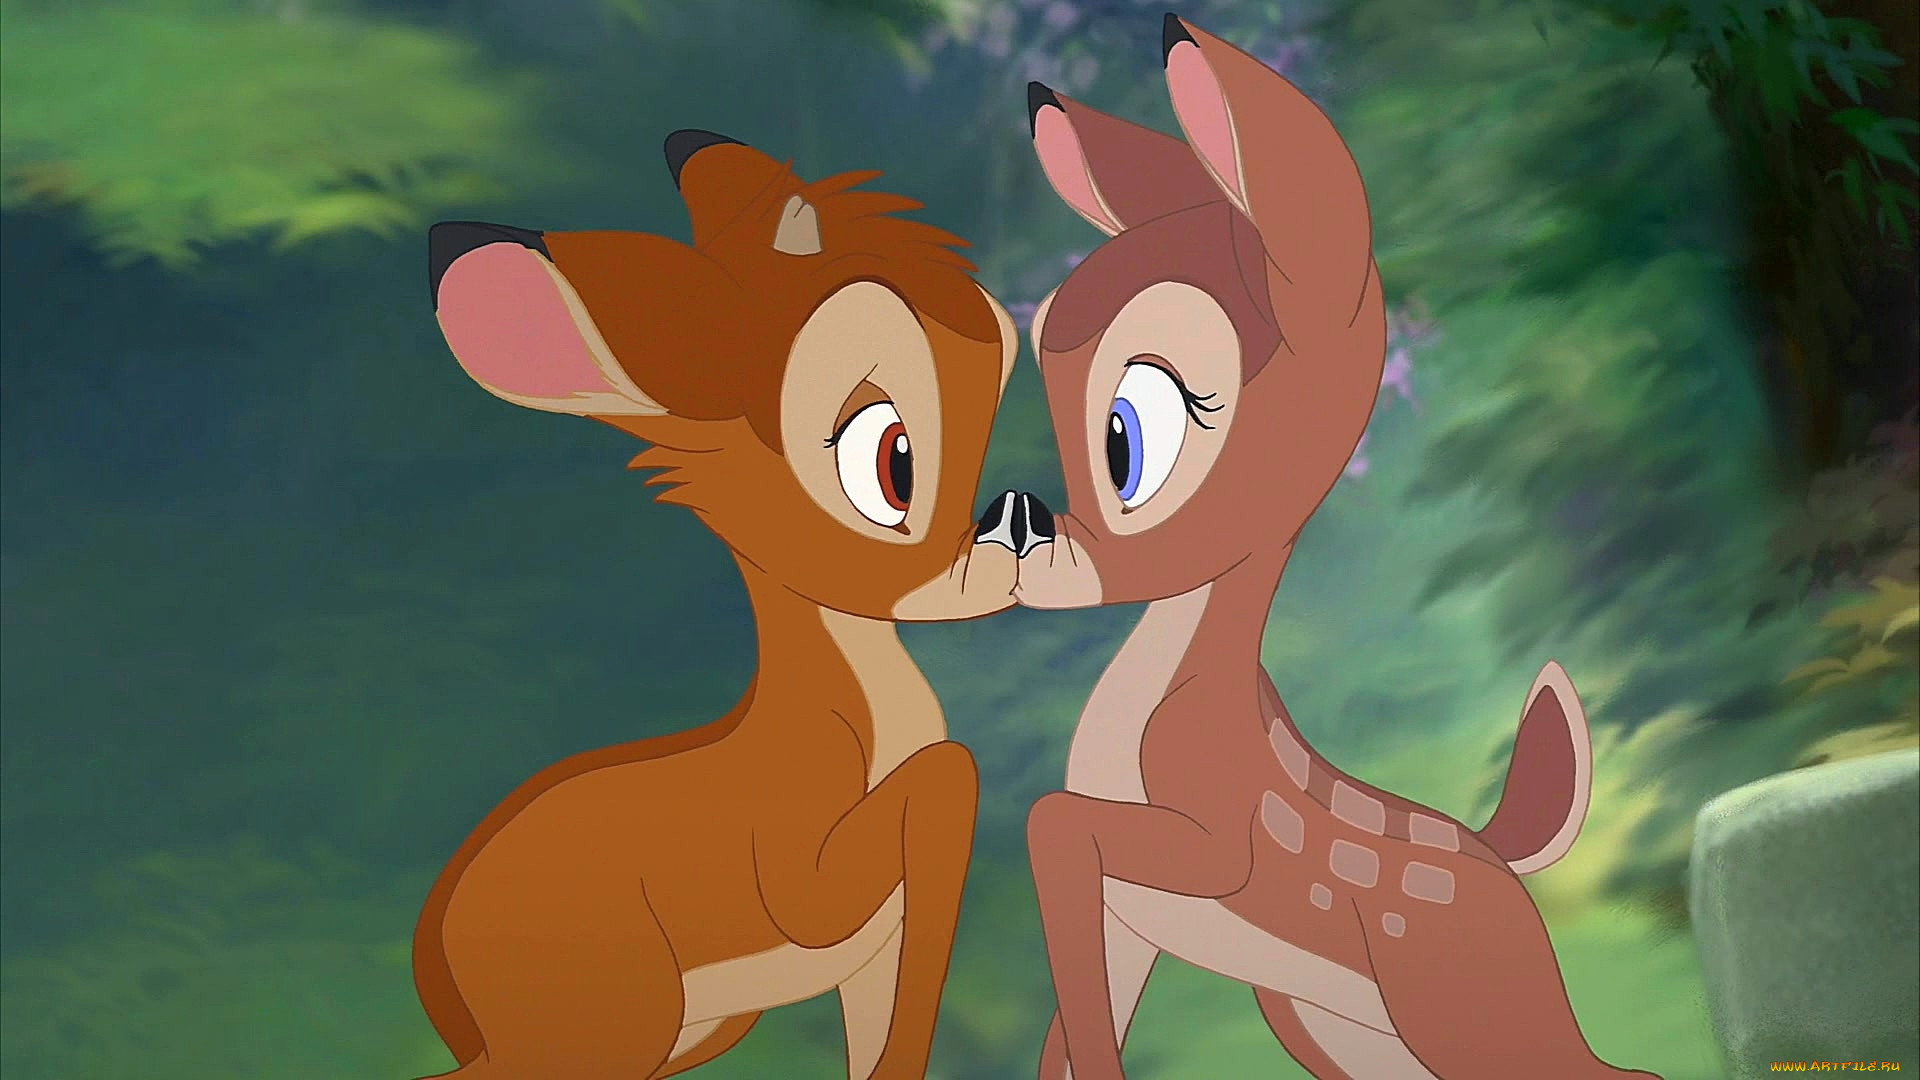 , bambi 2, , 